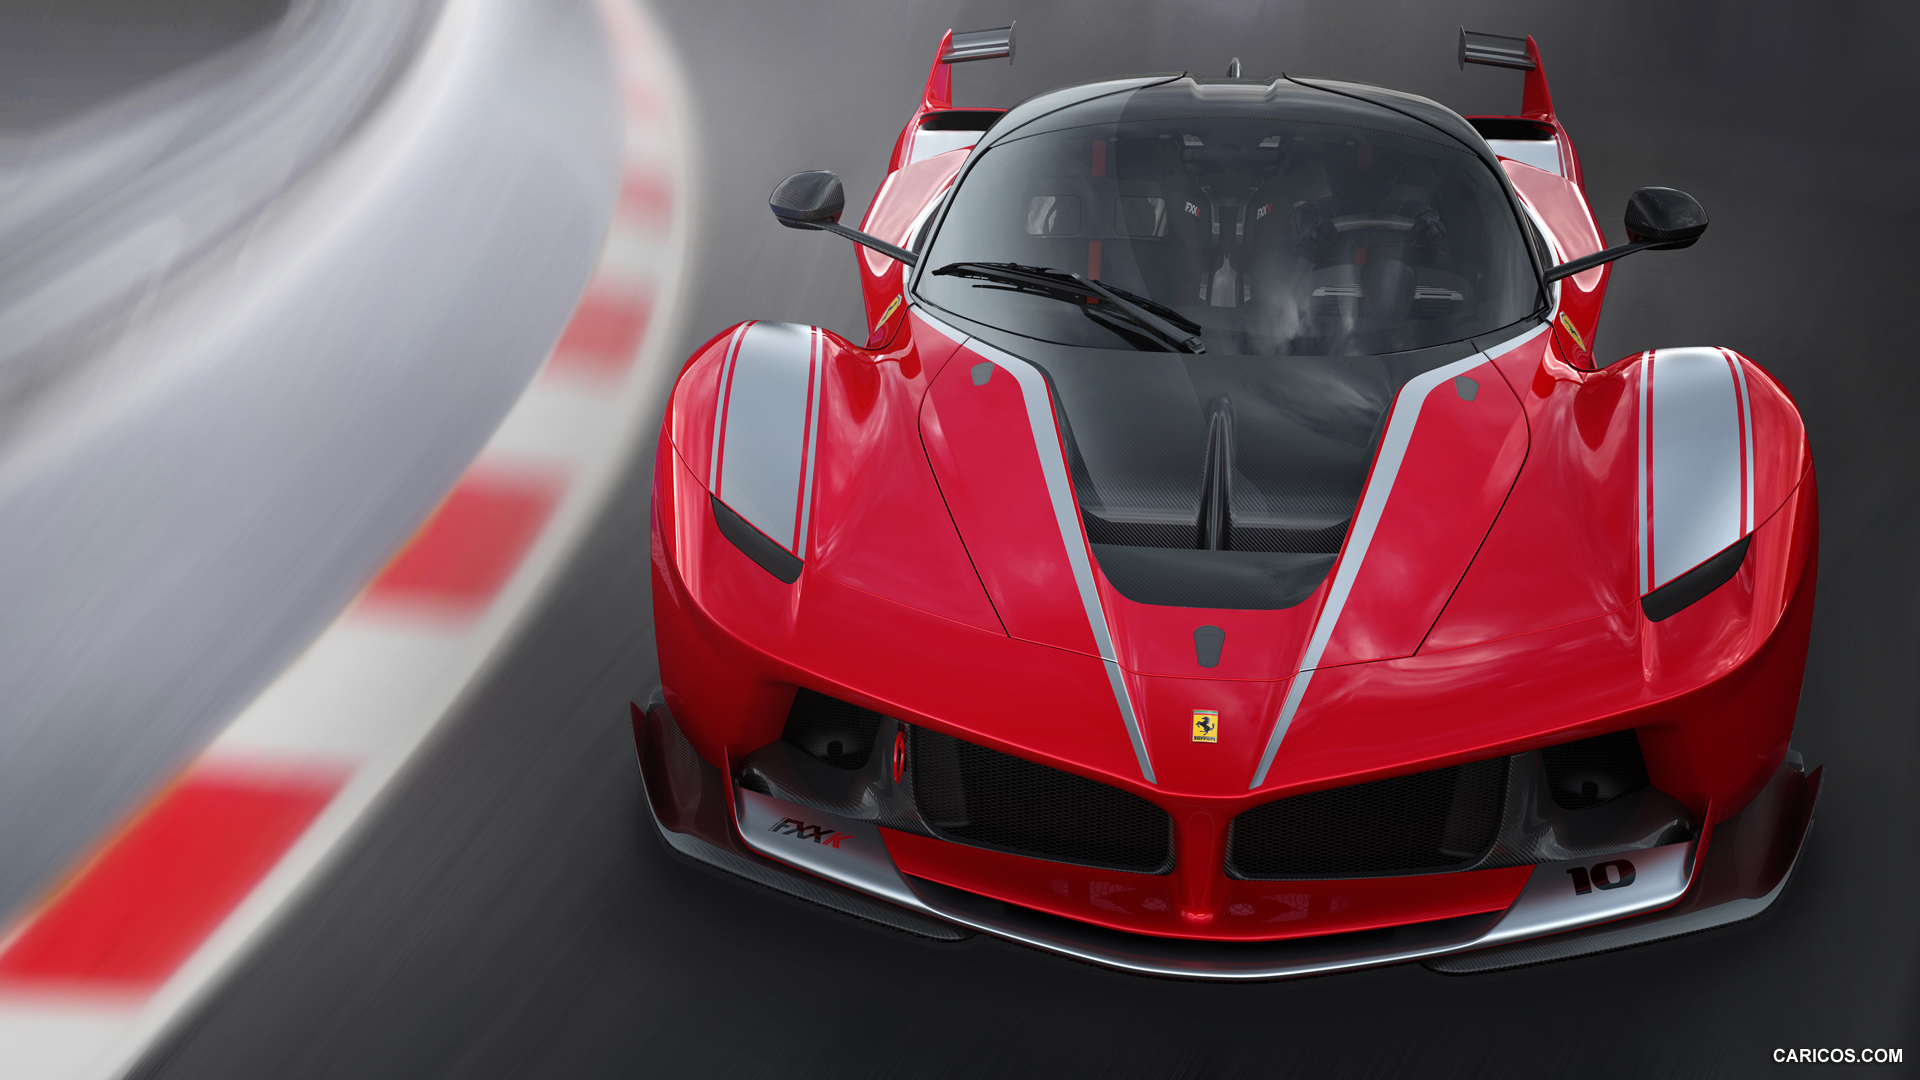 2015 Ferrari FXX K Pics, Vehicles Collection